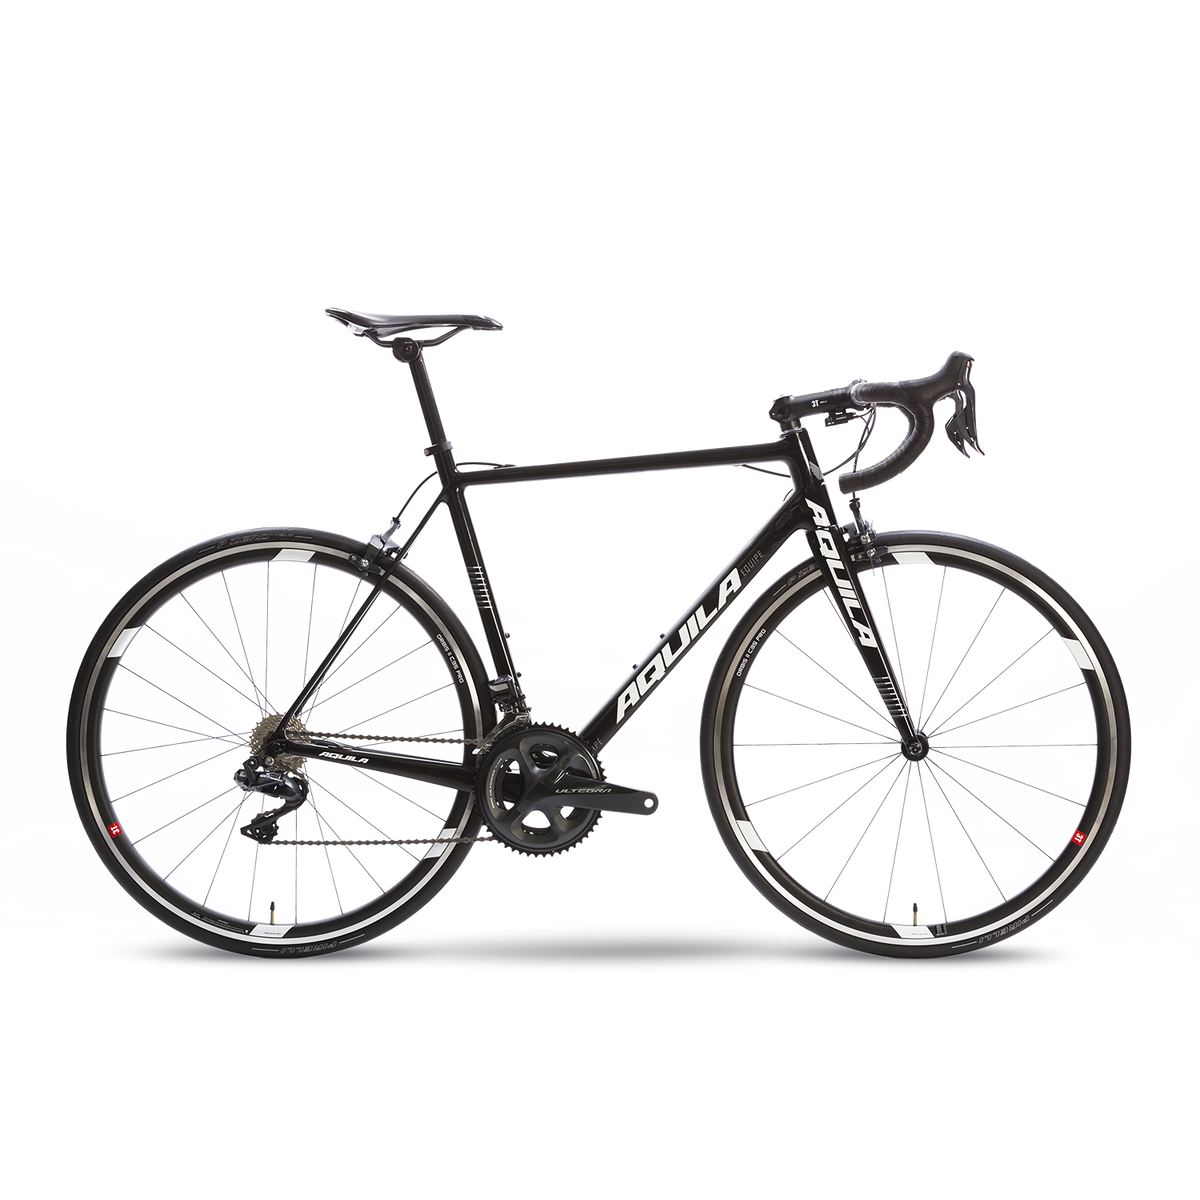 Aquila Equipe Shimano Ultegra R8050 Di2 Road Bike Black